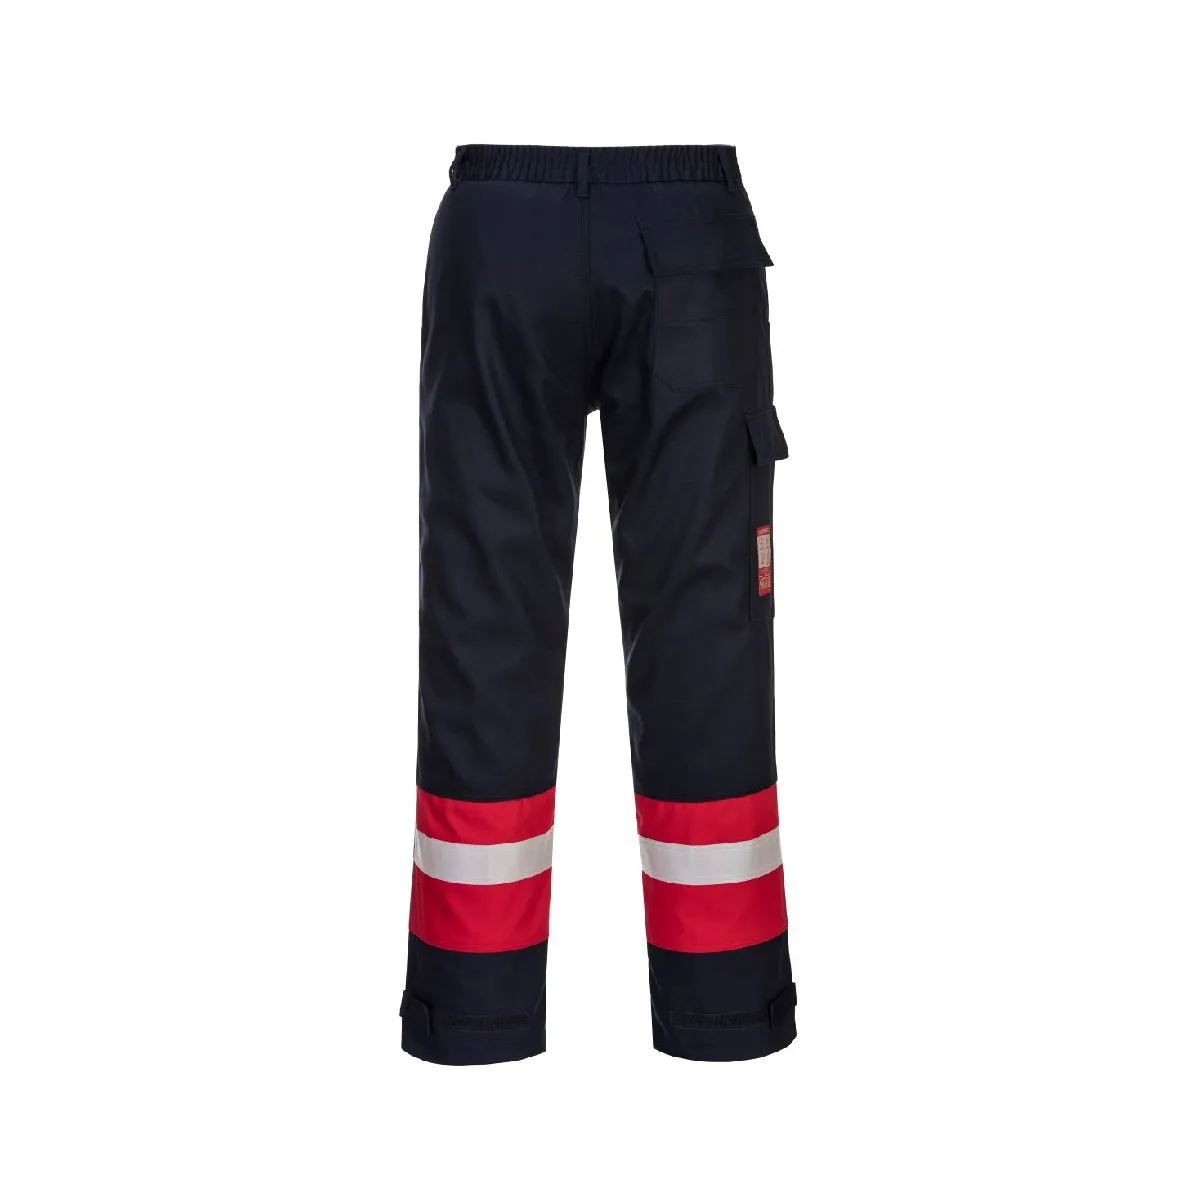 Vatrootporne pantalone FR56 crvena - Portwest 